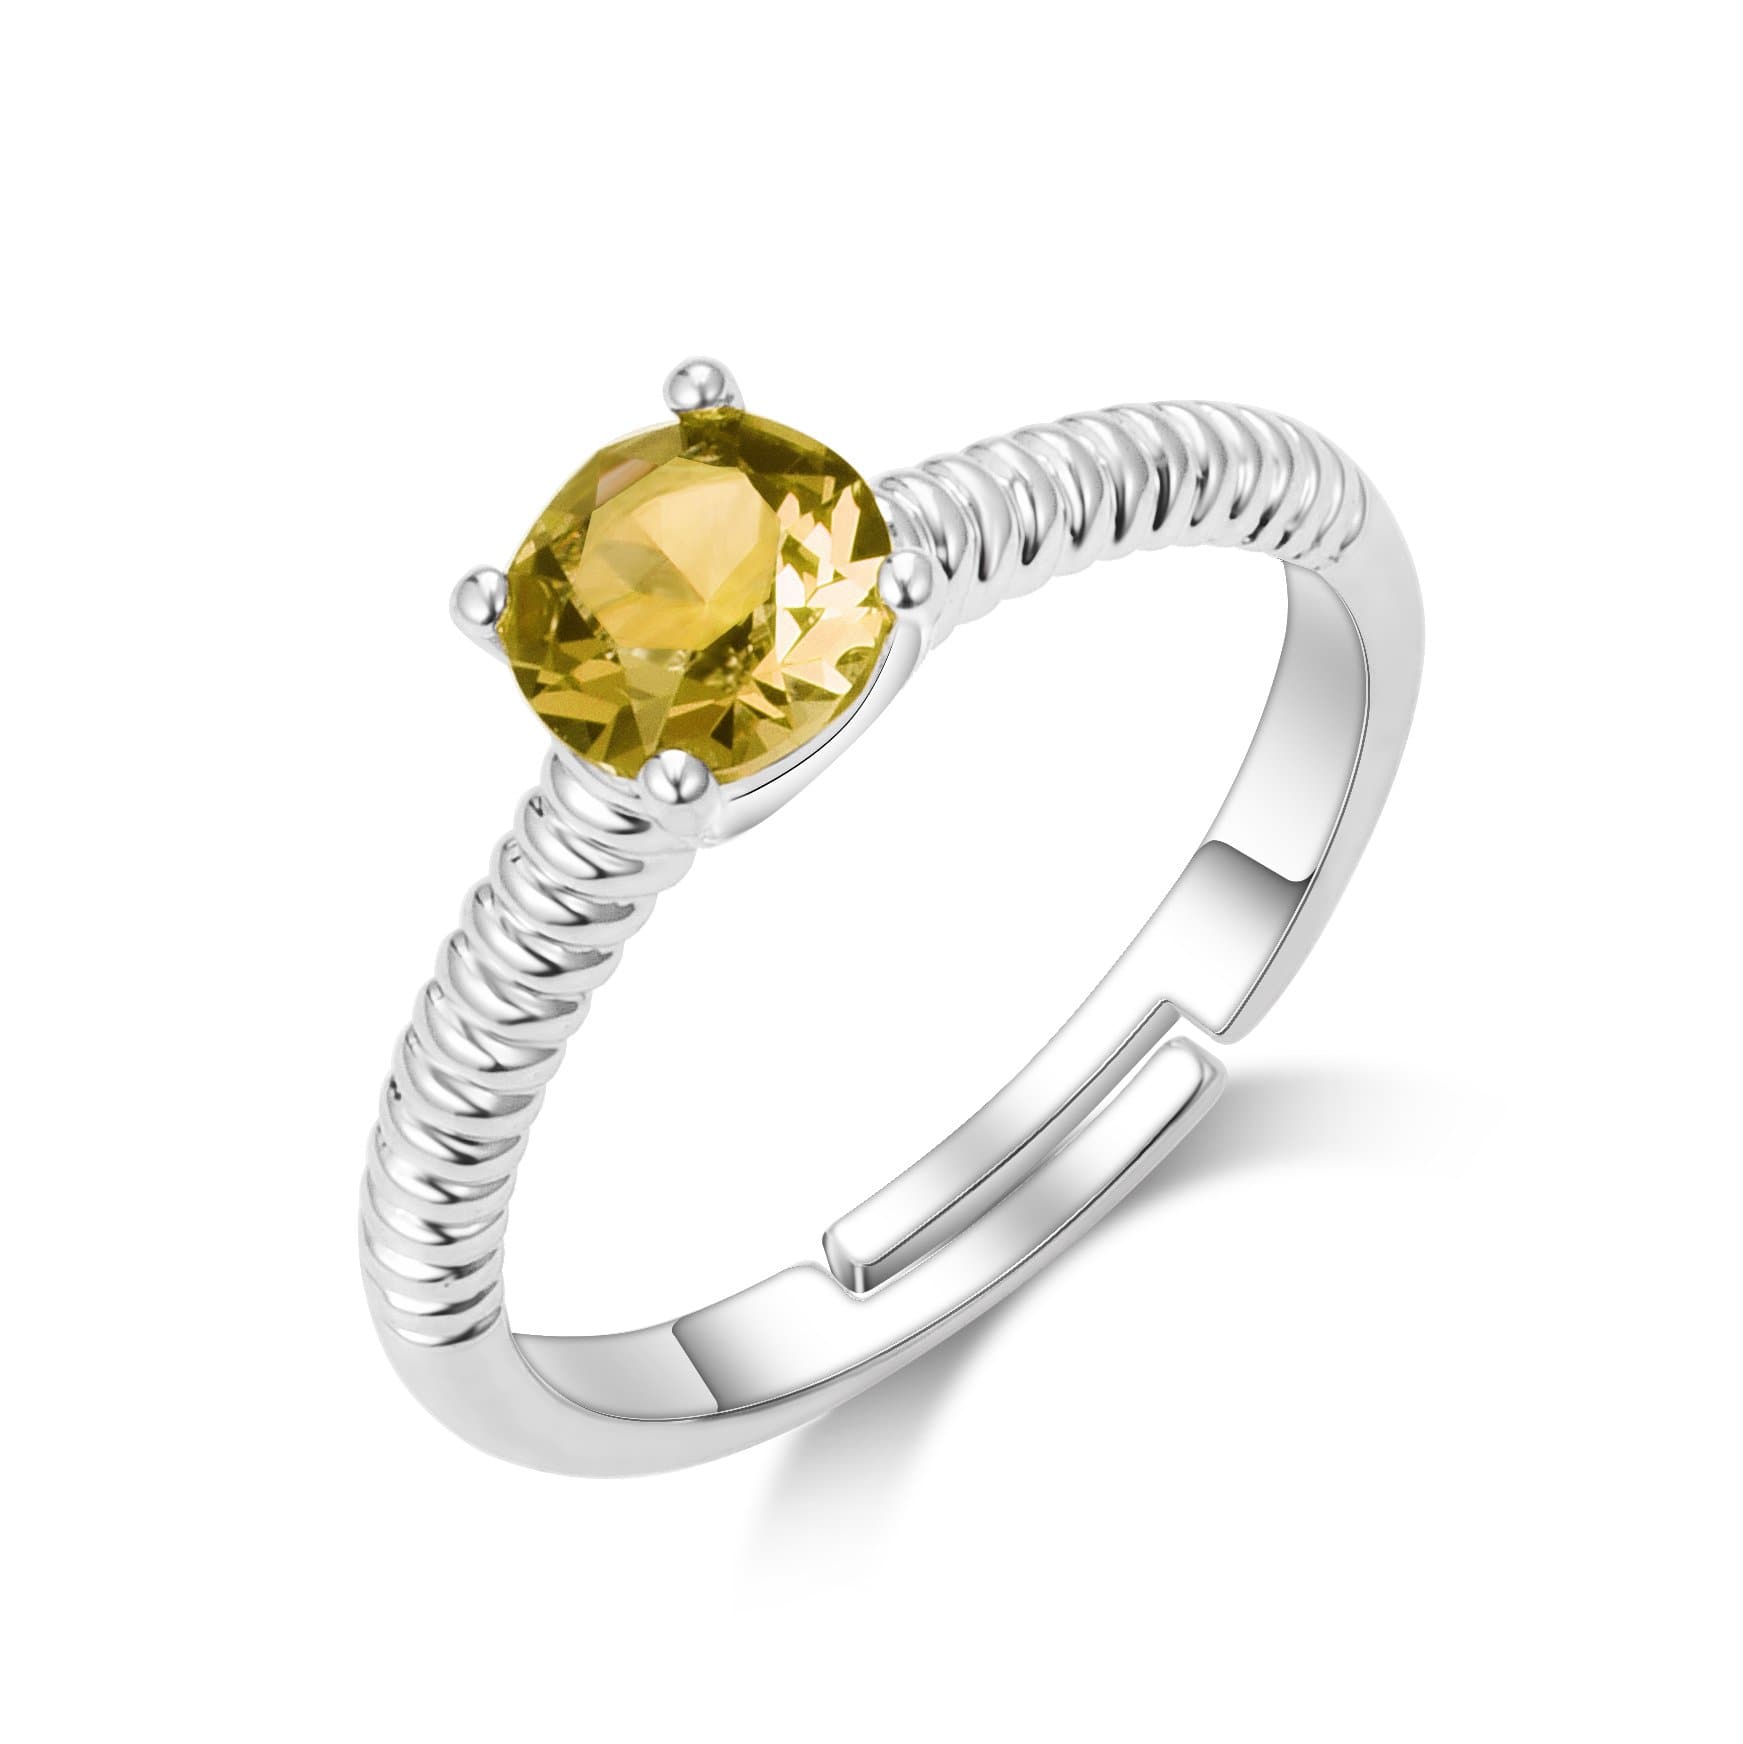 Yellow Adjustable Crystal Ring Created with Zircondia® Crystals by Philip Jones Jewellery